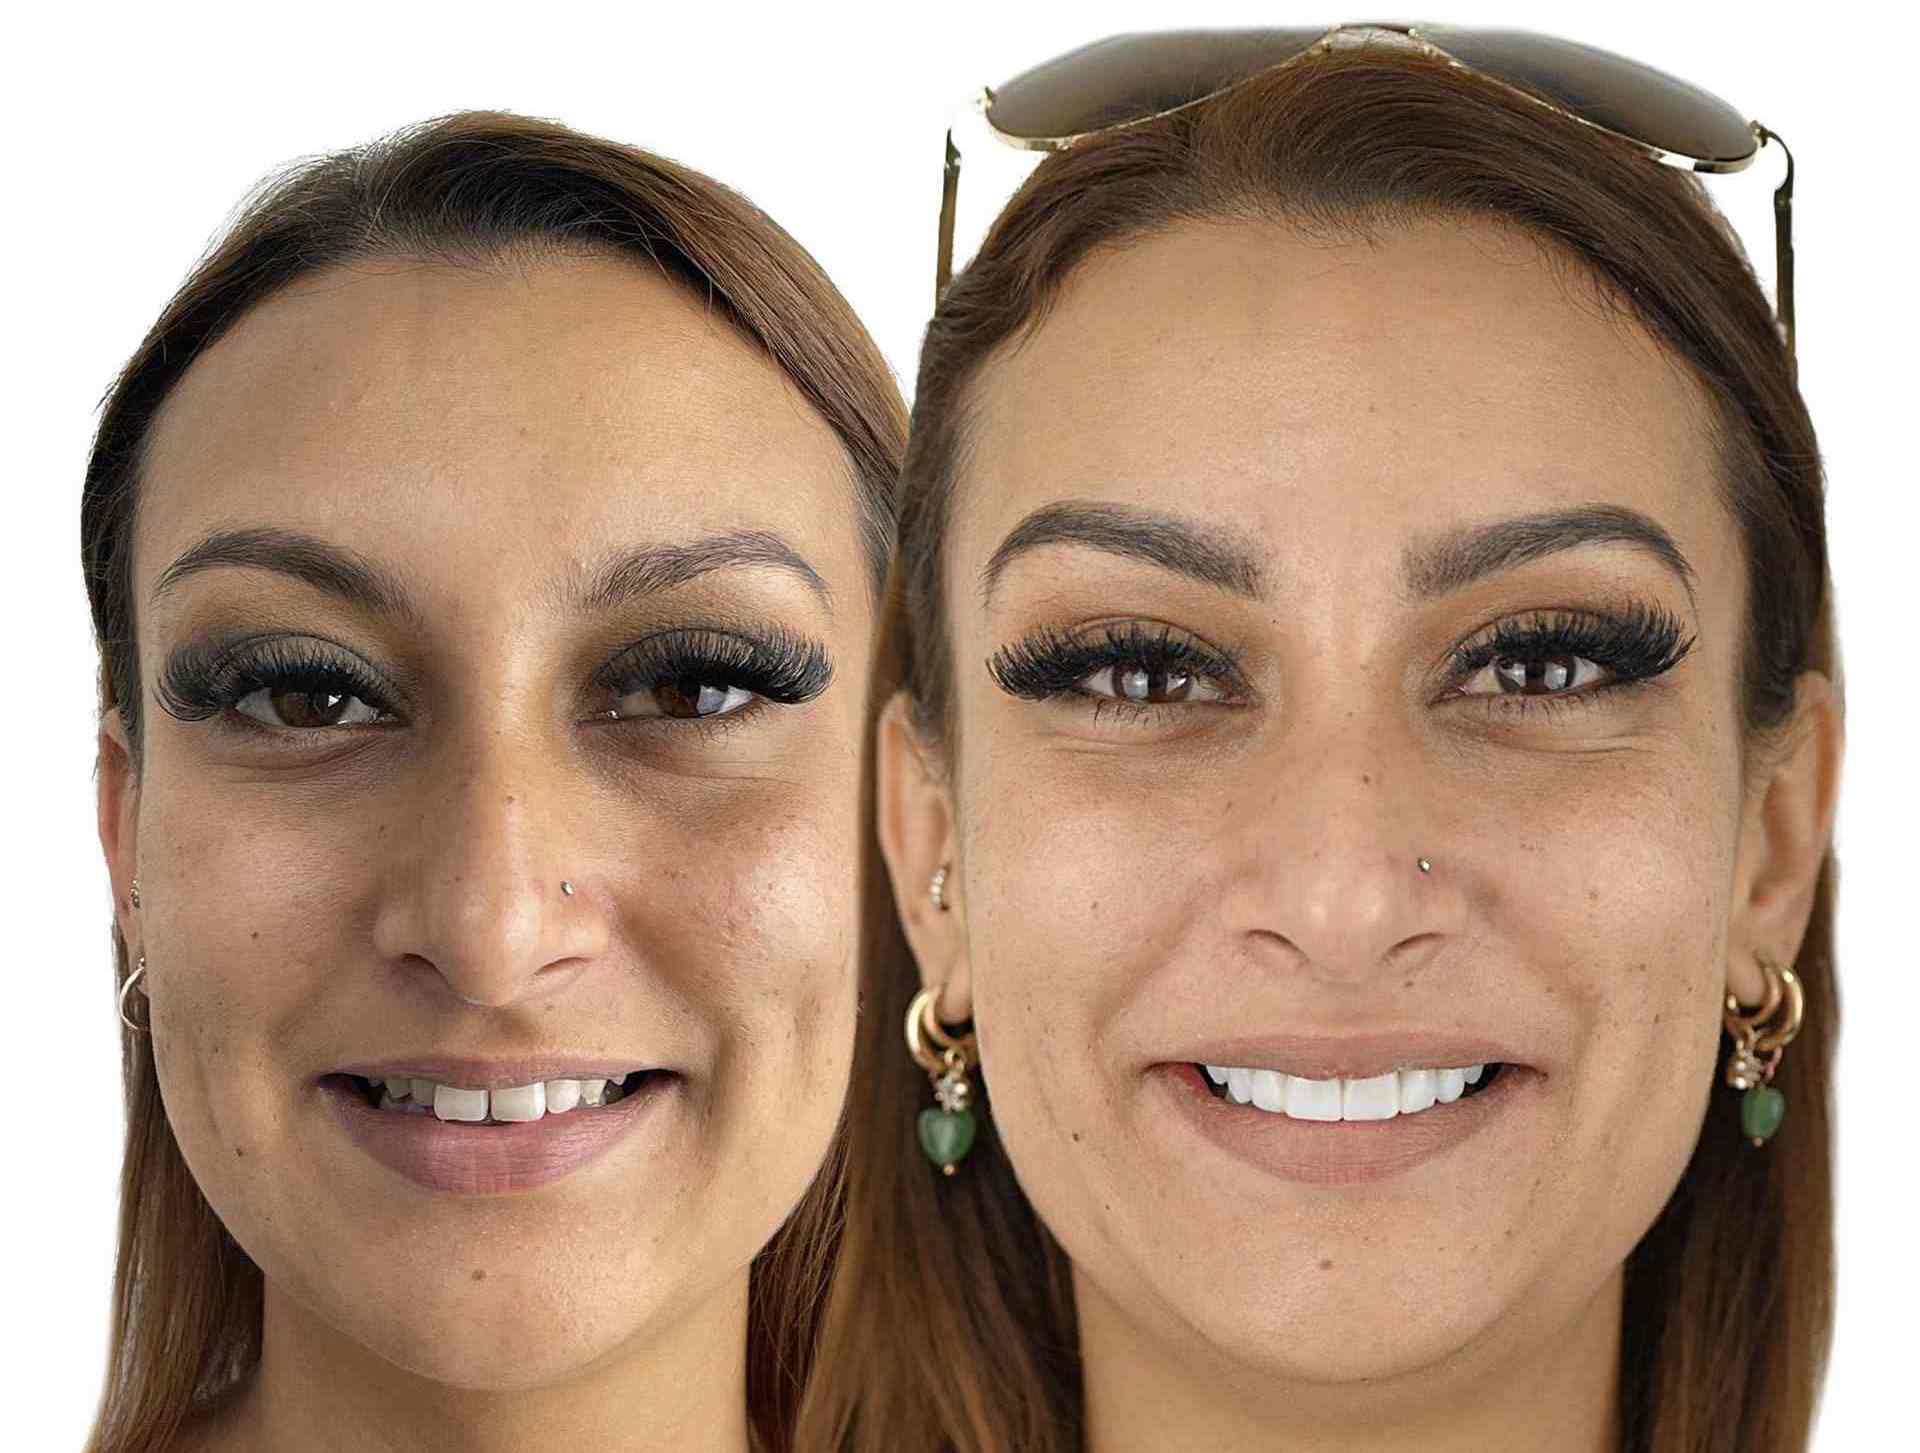 Before & after results from veneers in Brisbane